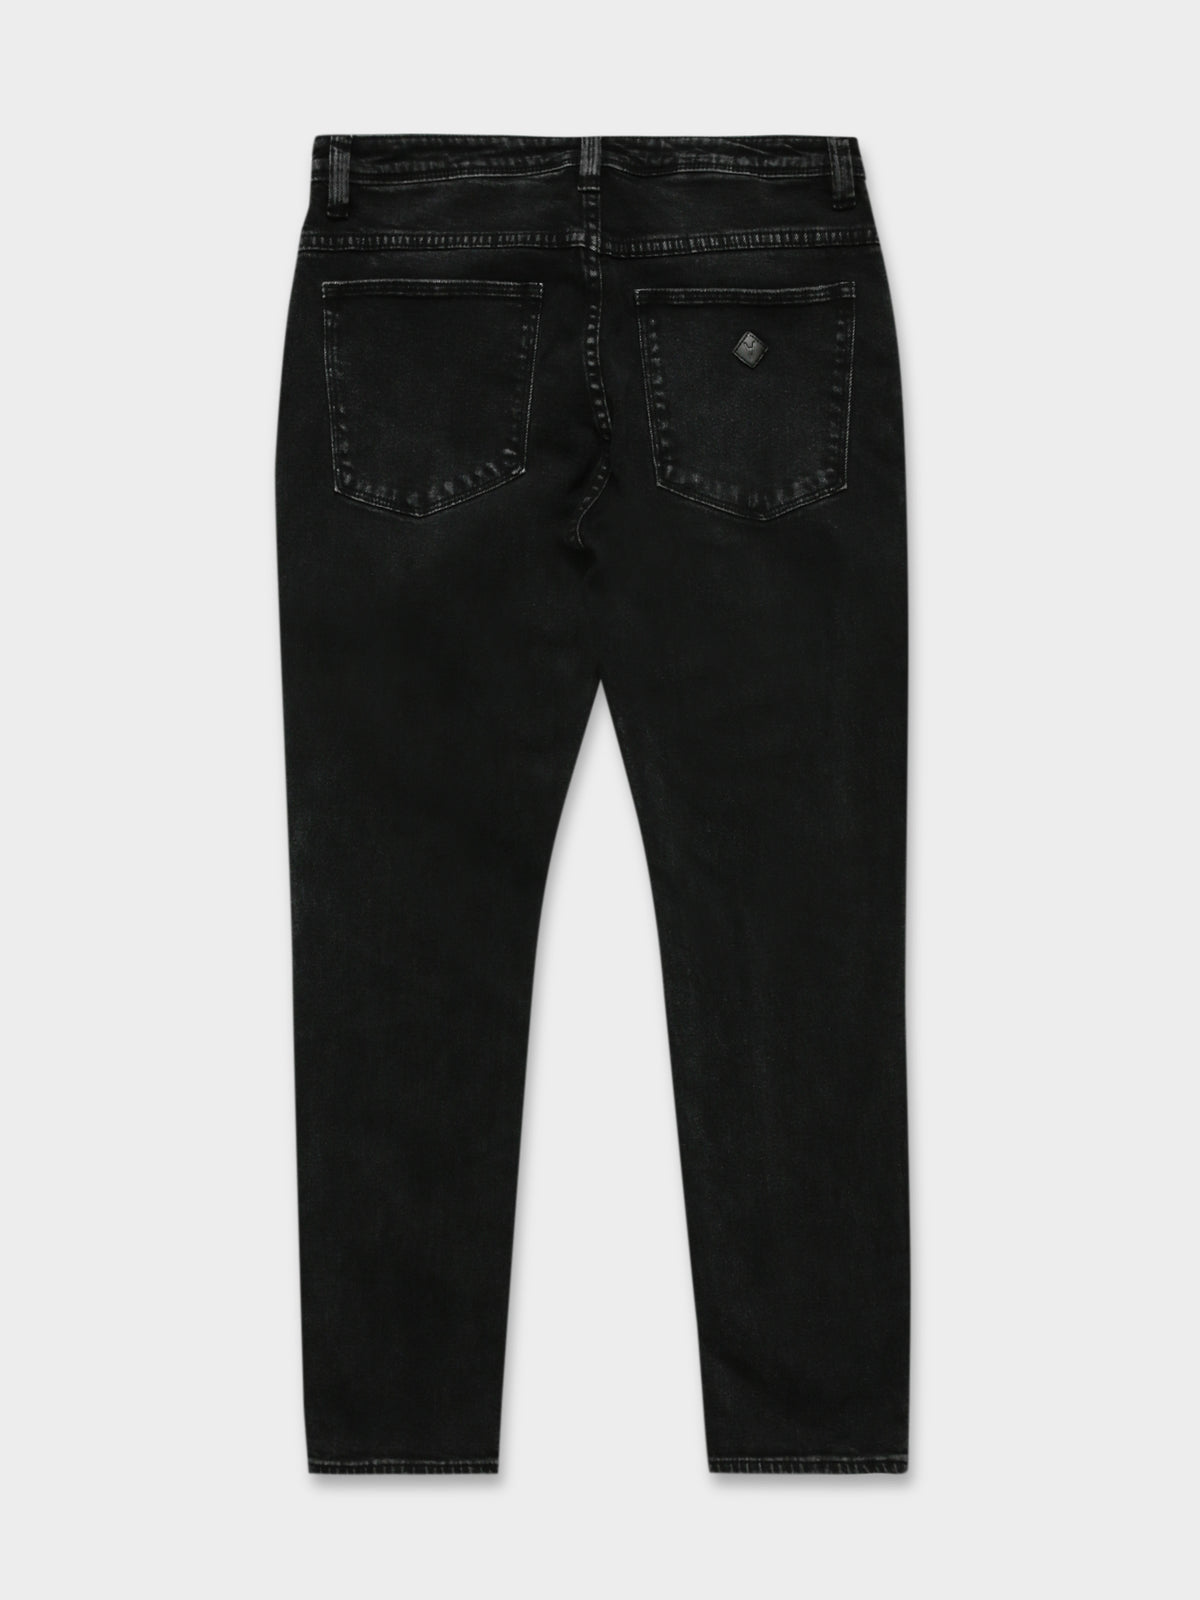 A Dropped Slim Jeans in Nebula Black